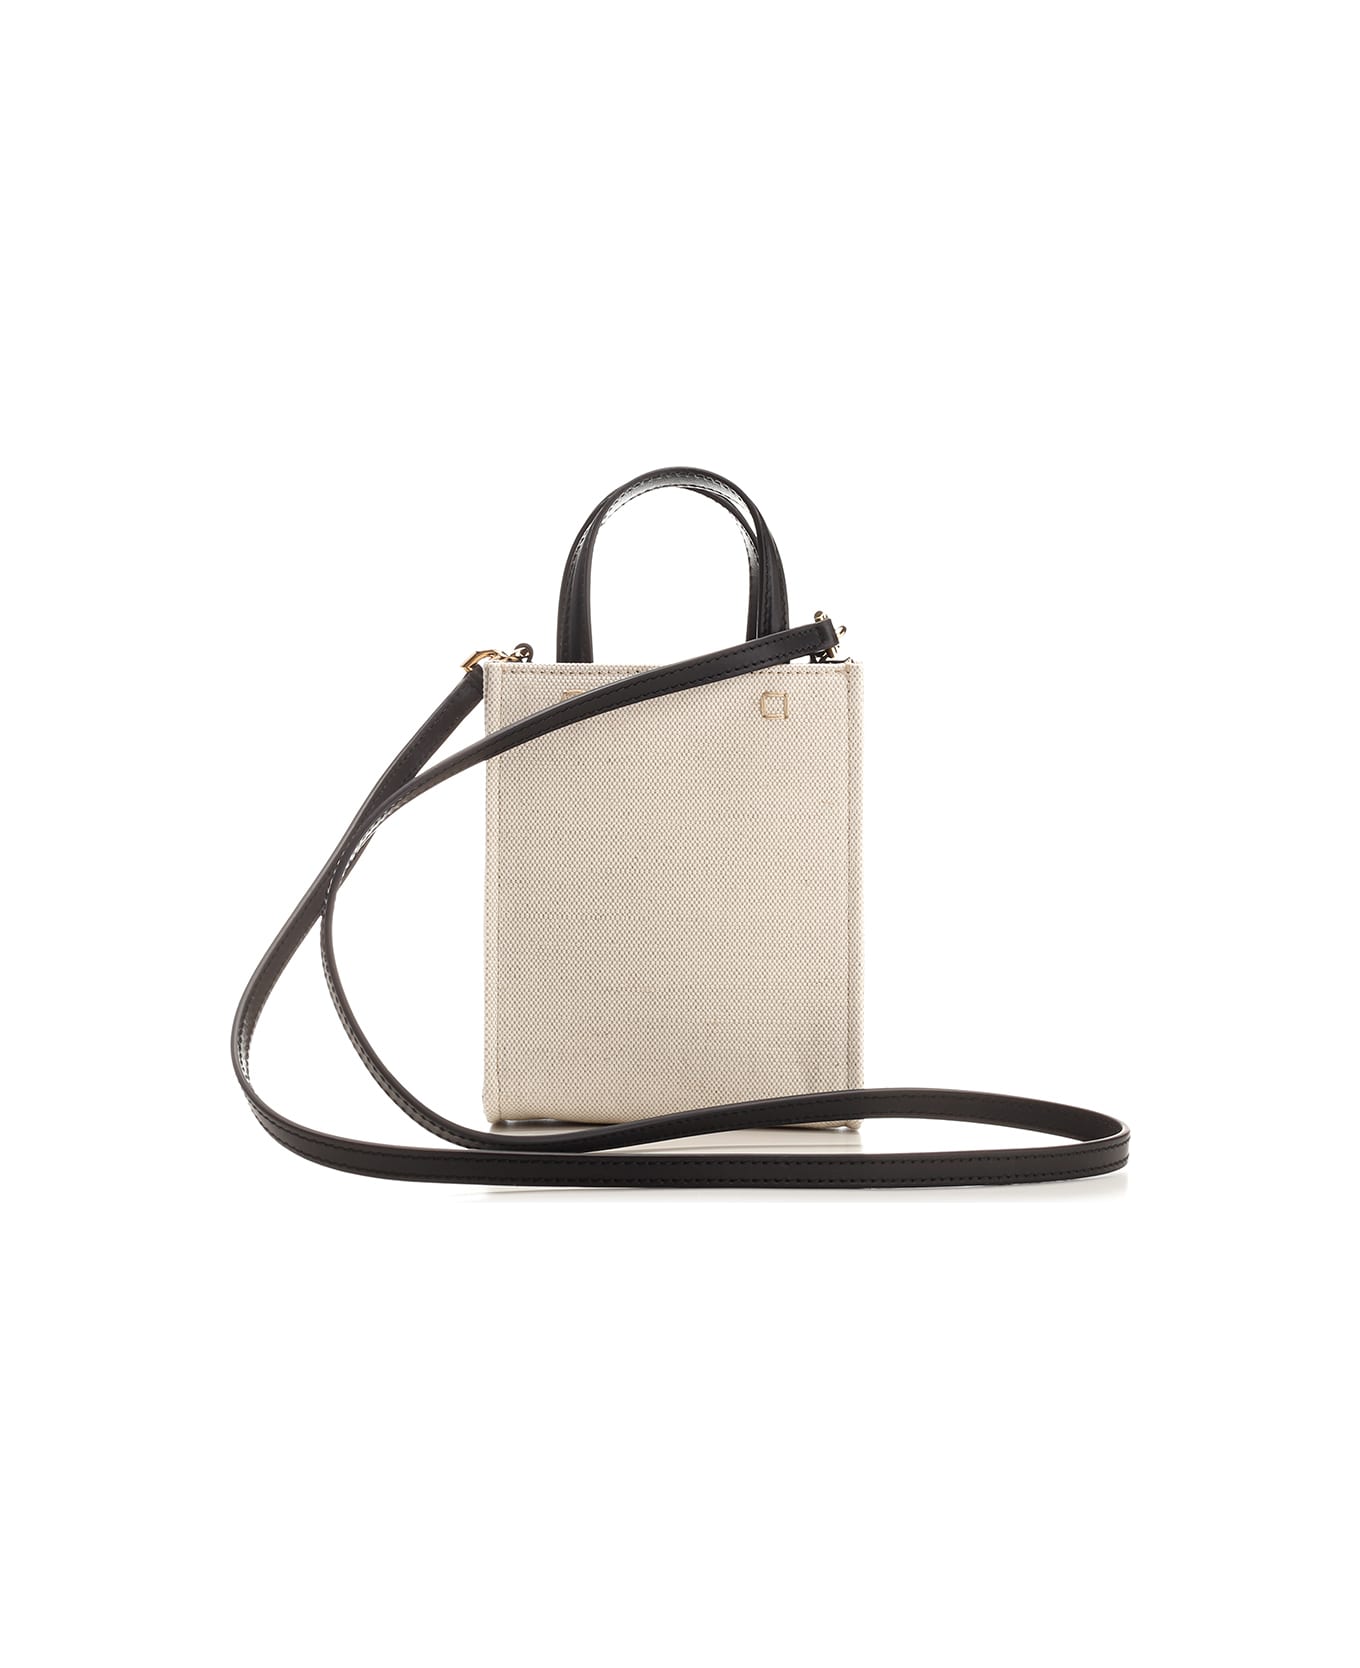 Givenchy 'g Tote' Mini Bag - Beige